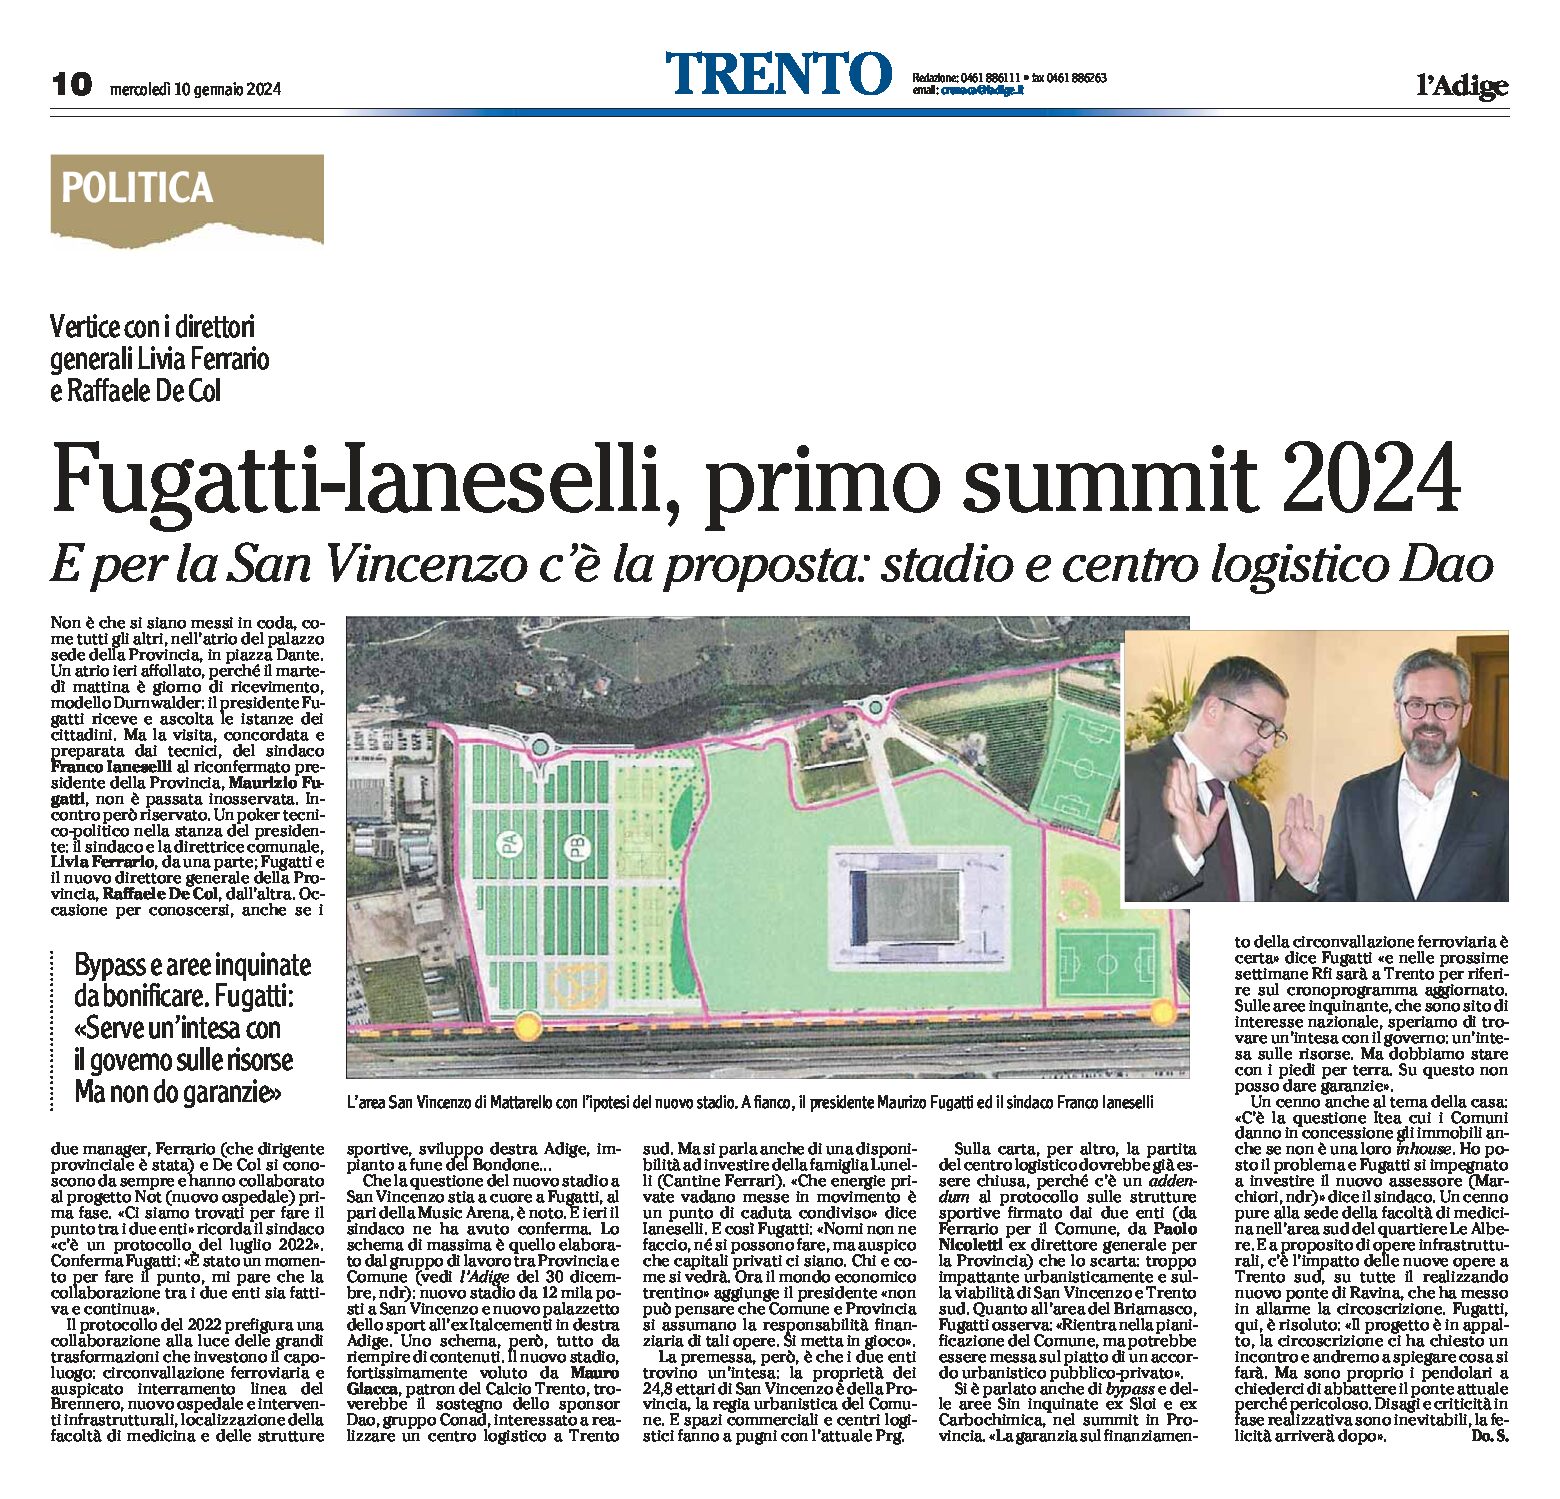 Trento: Fugatti-Ianeselli, primo summit 2024